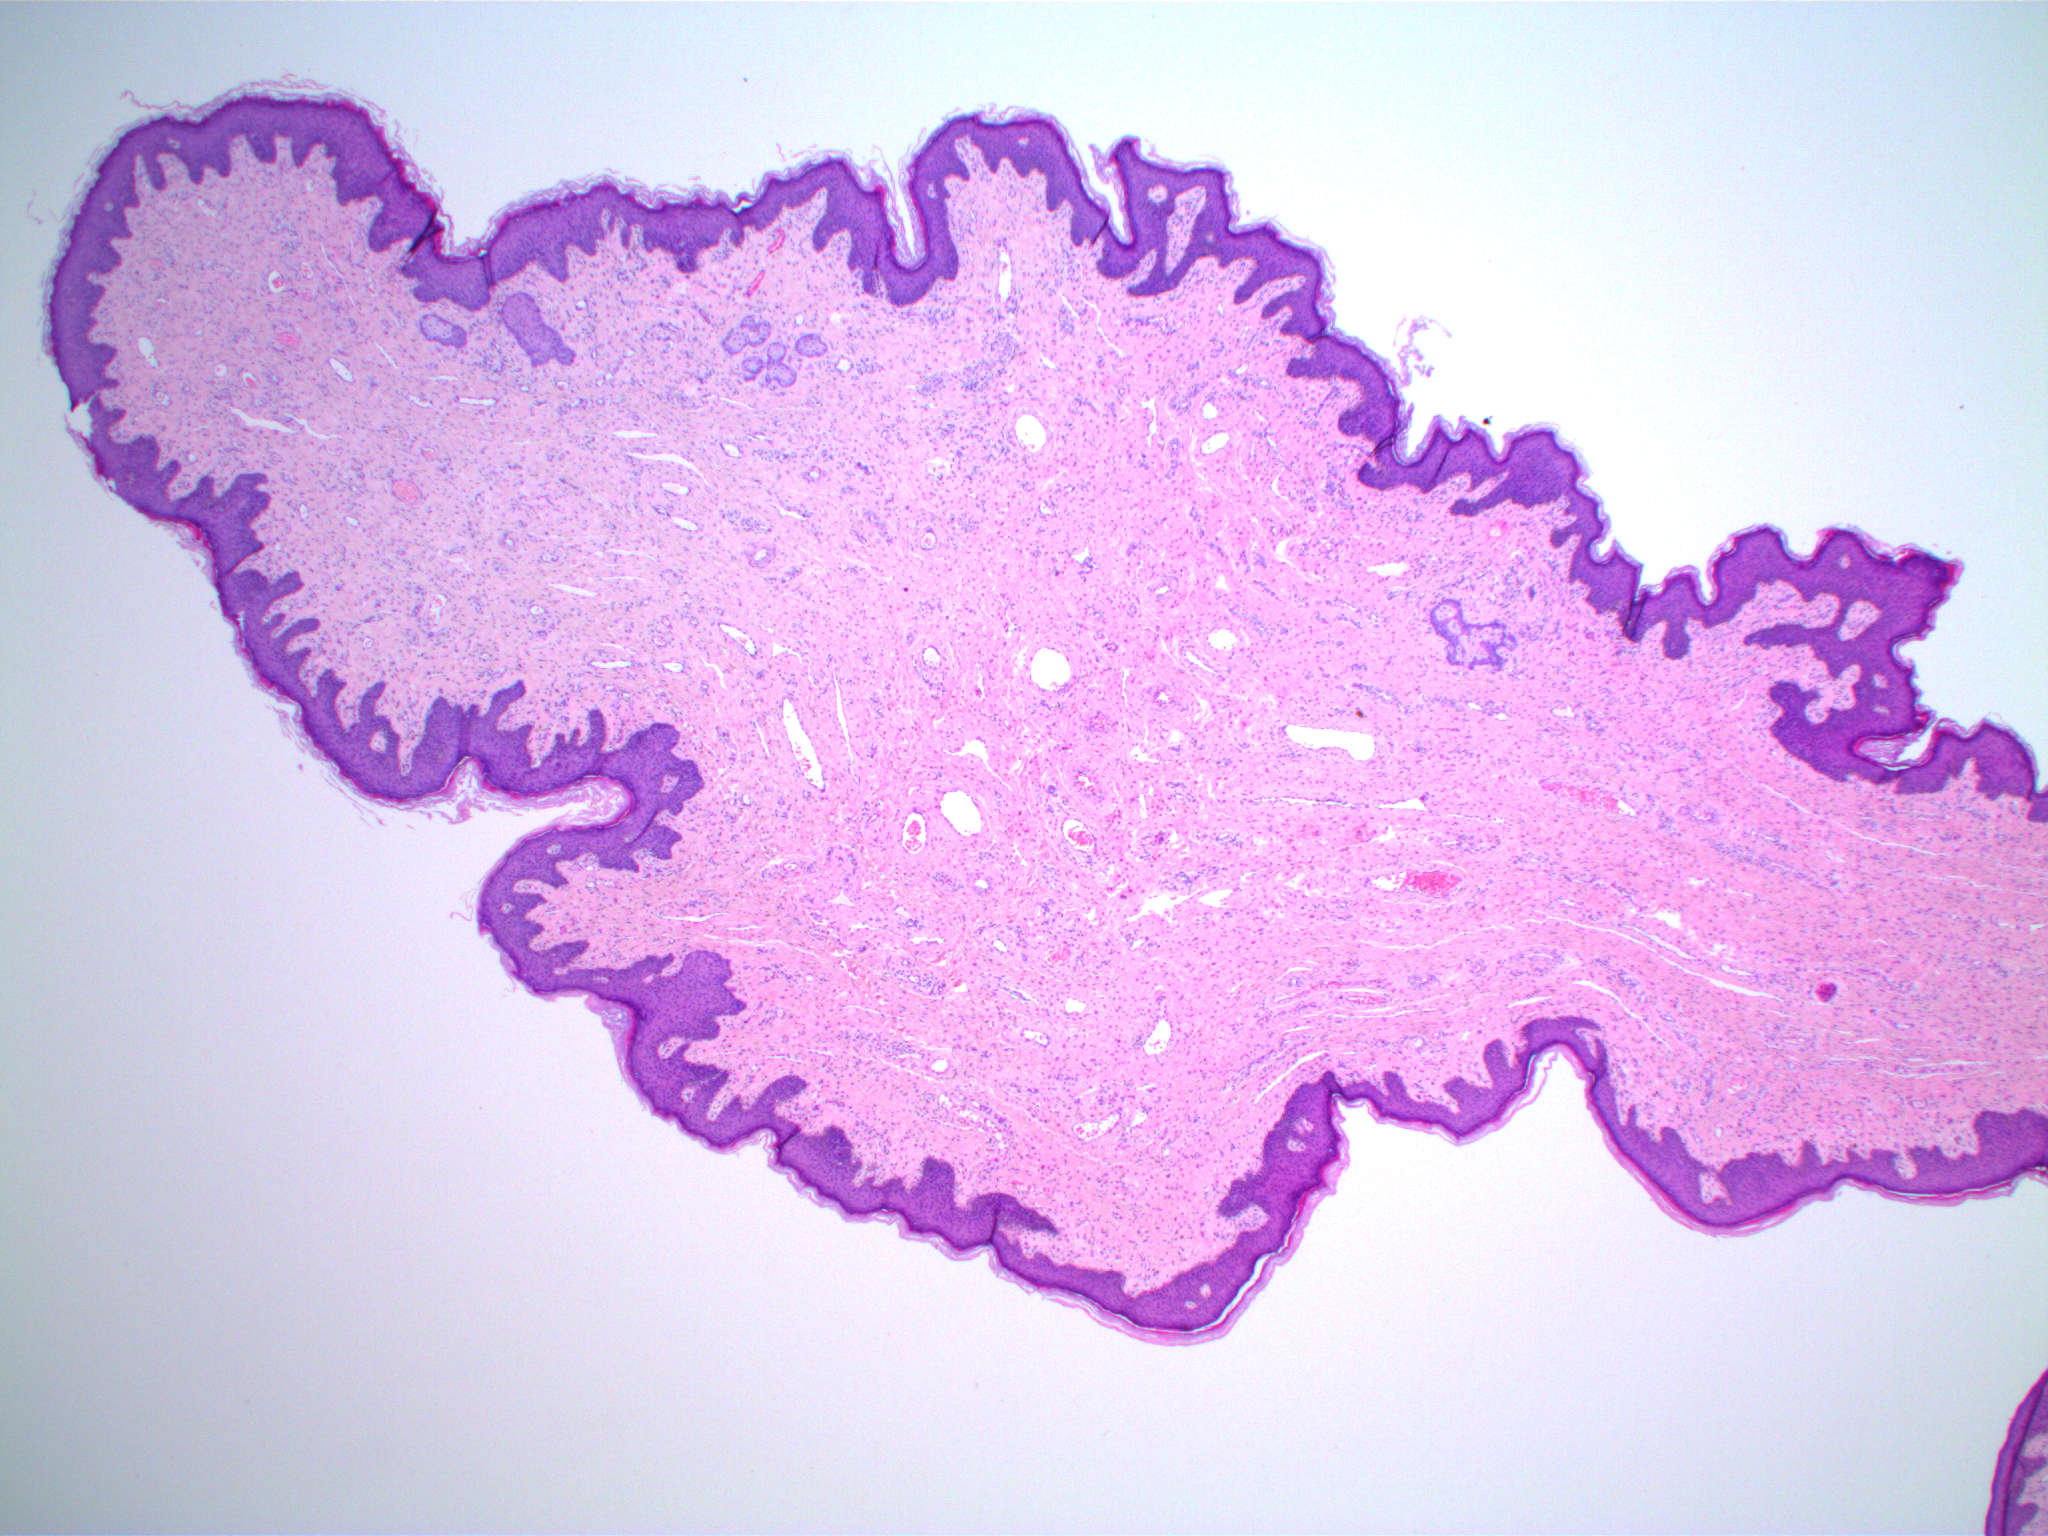 What causes fibroepithelial papilloma Fibroepithelial papillomas